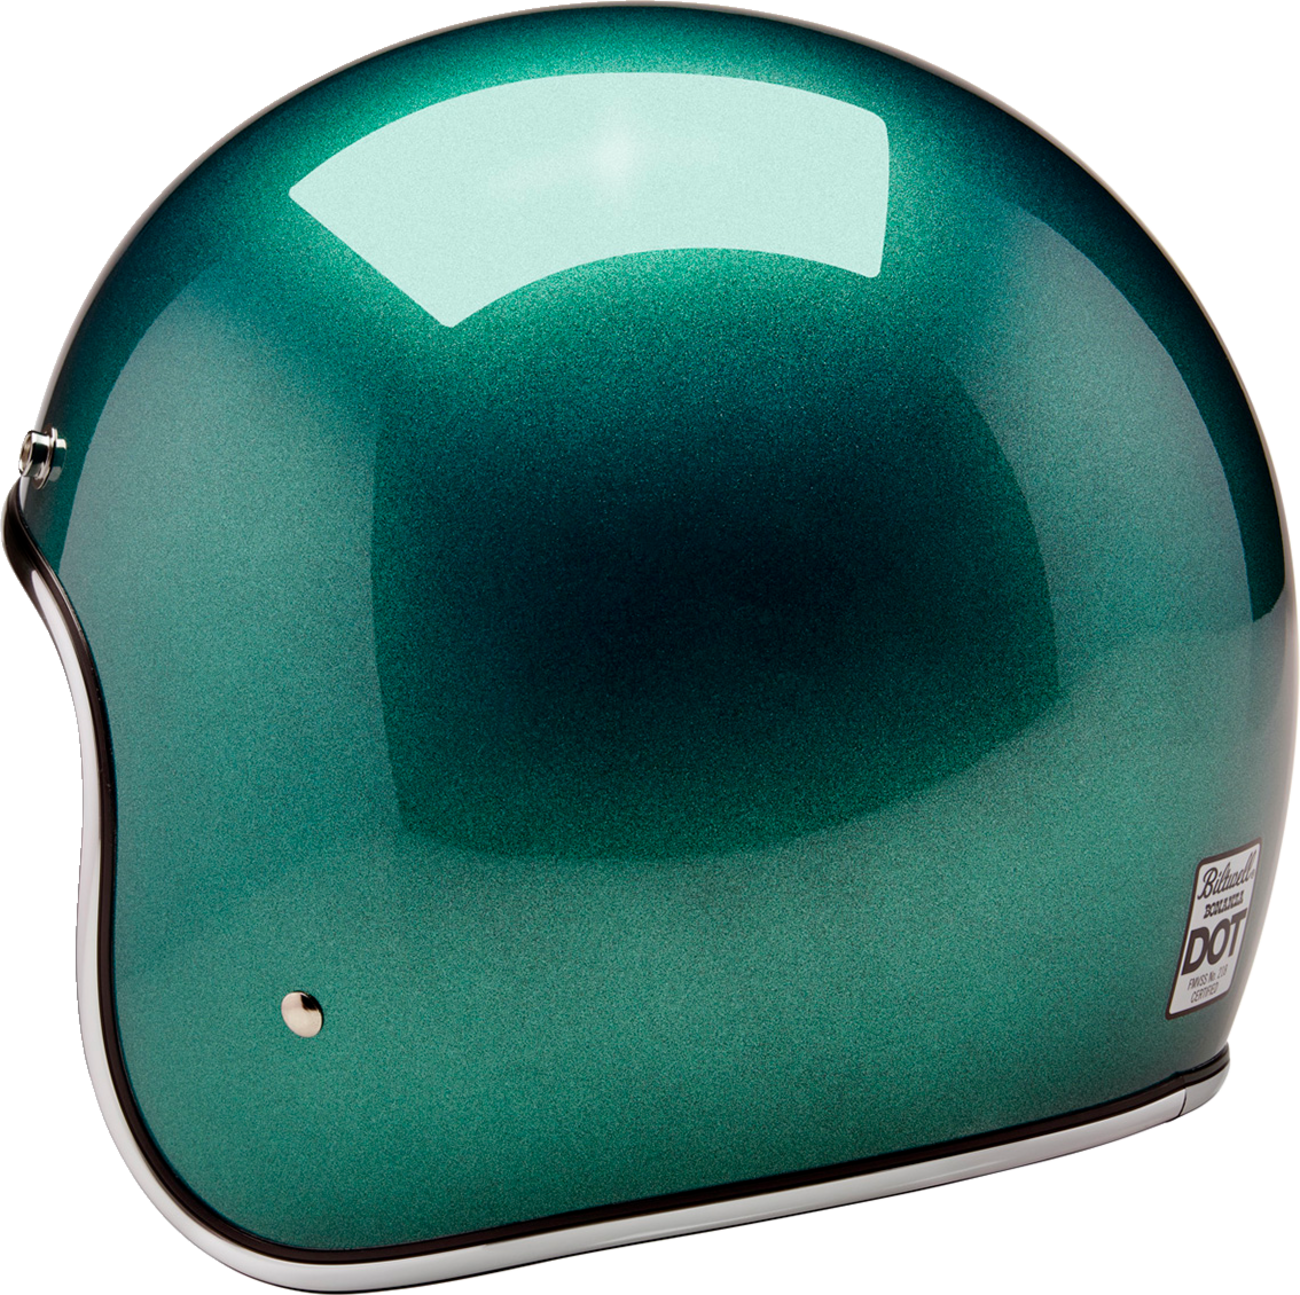 BILTWELL Bonanza Helmet - Metallic Catalina Green - Large 1001-358-204